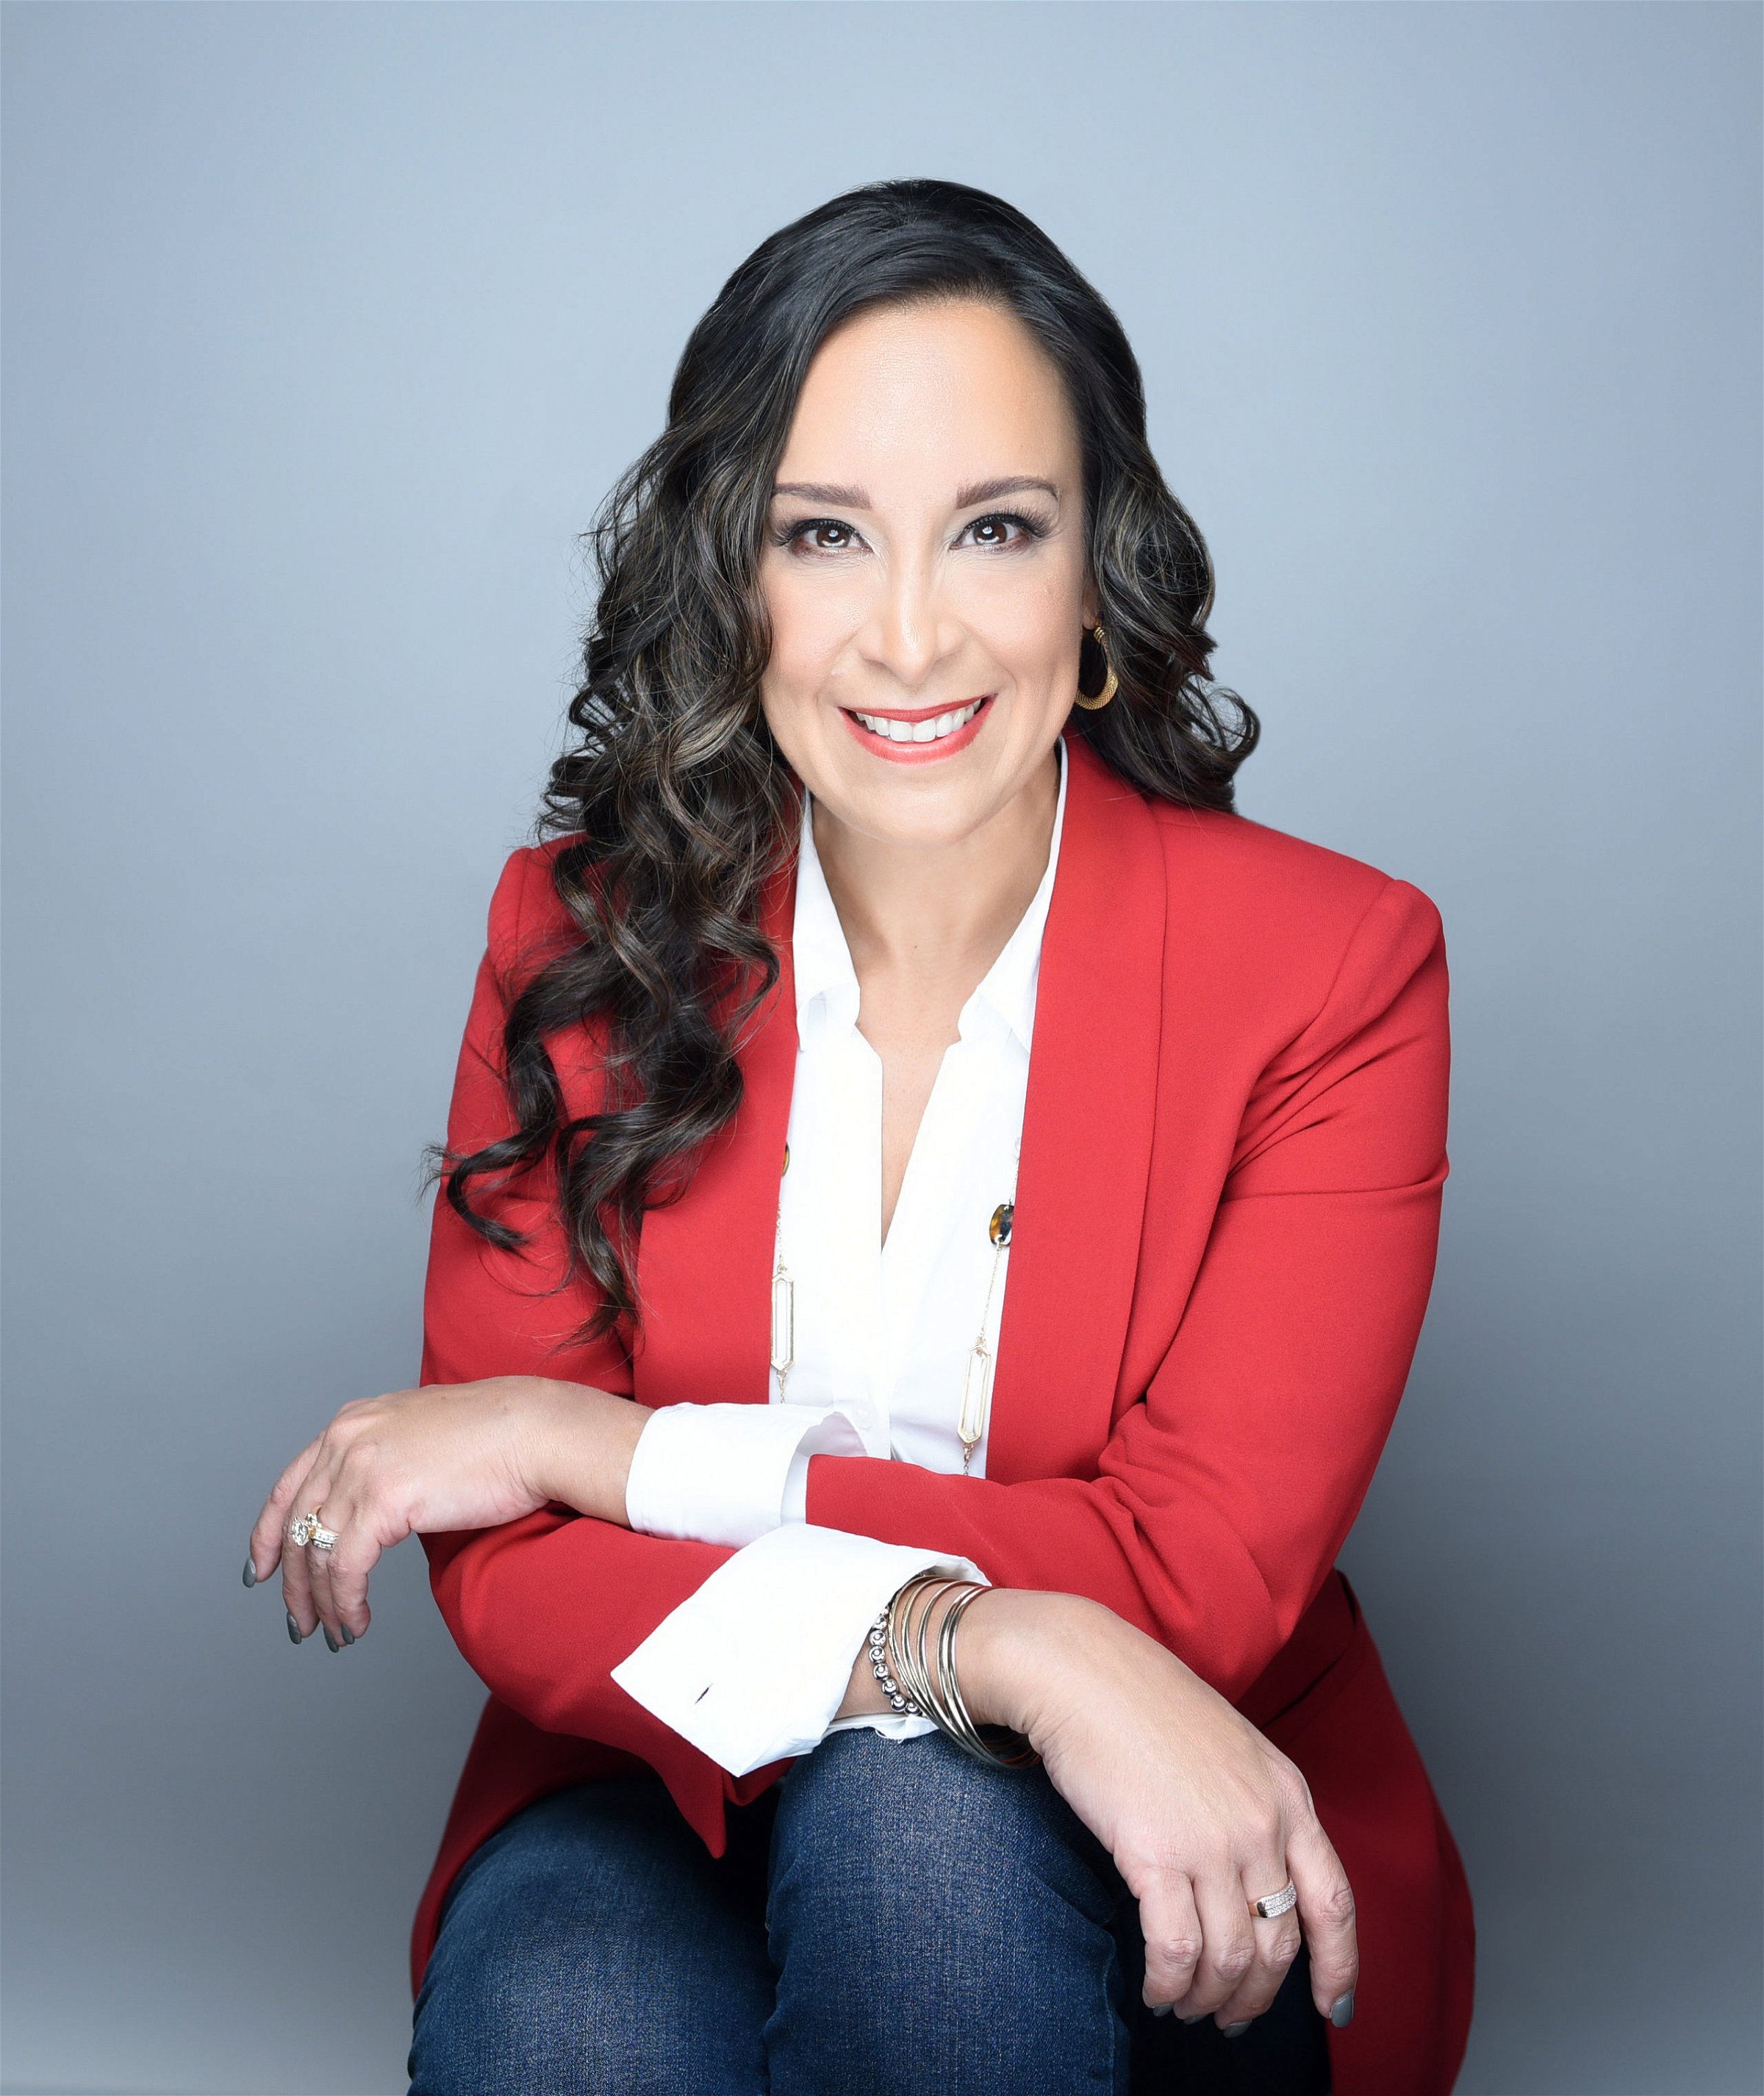 Republican Texas candidate Monica De La Cruz-Hernandez